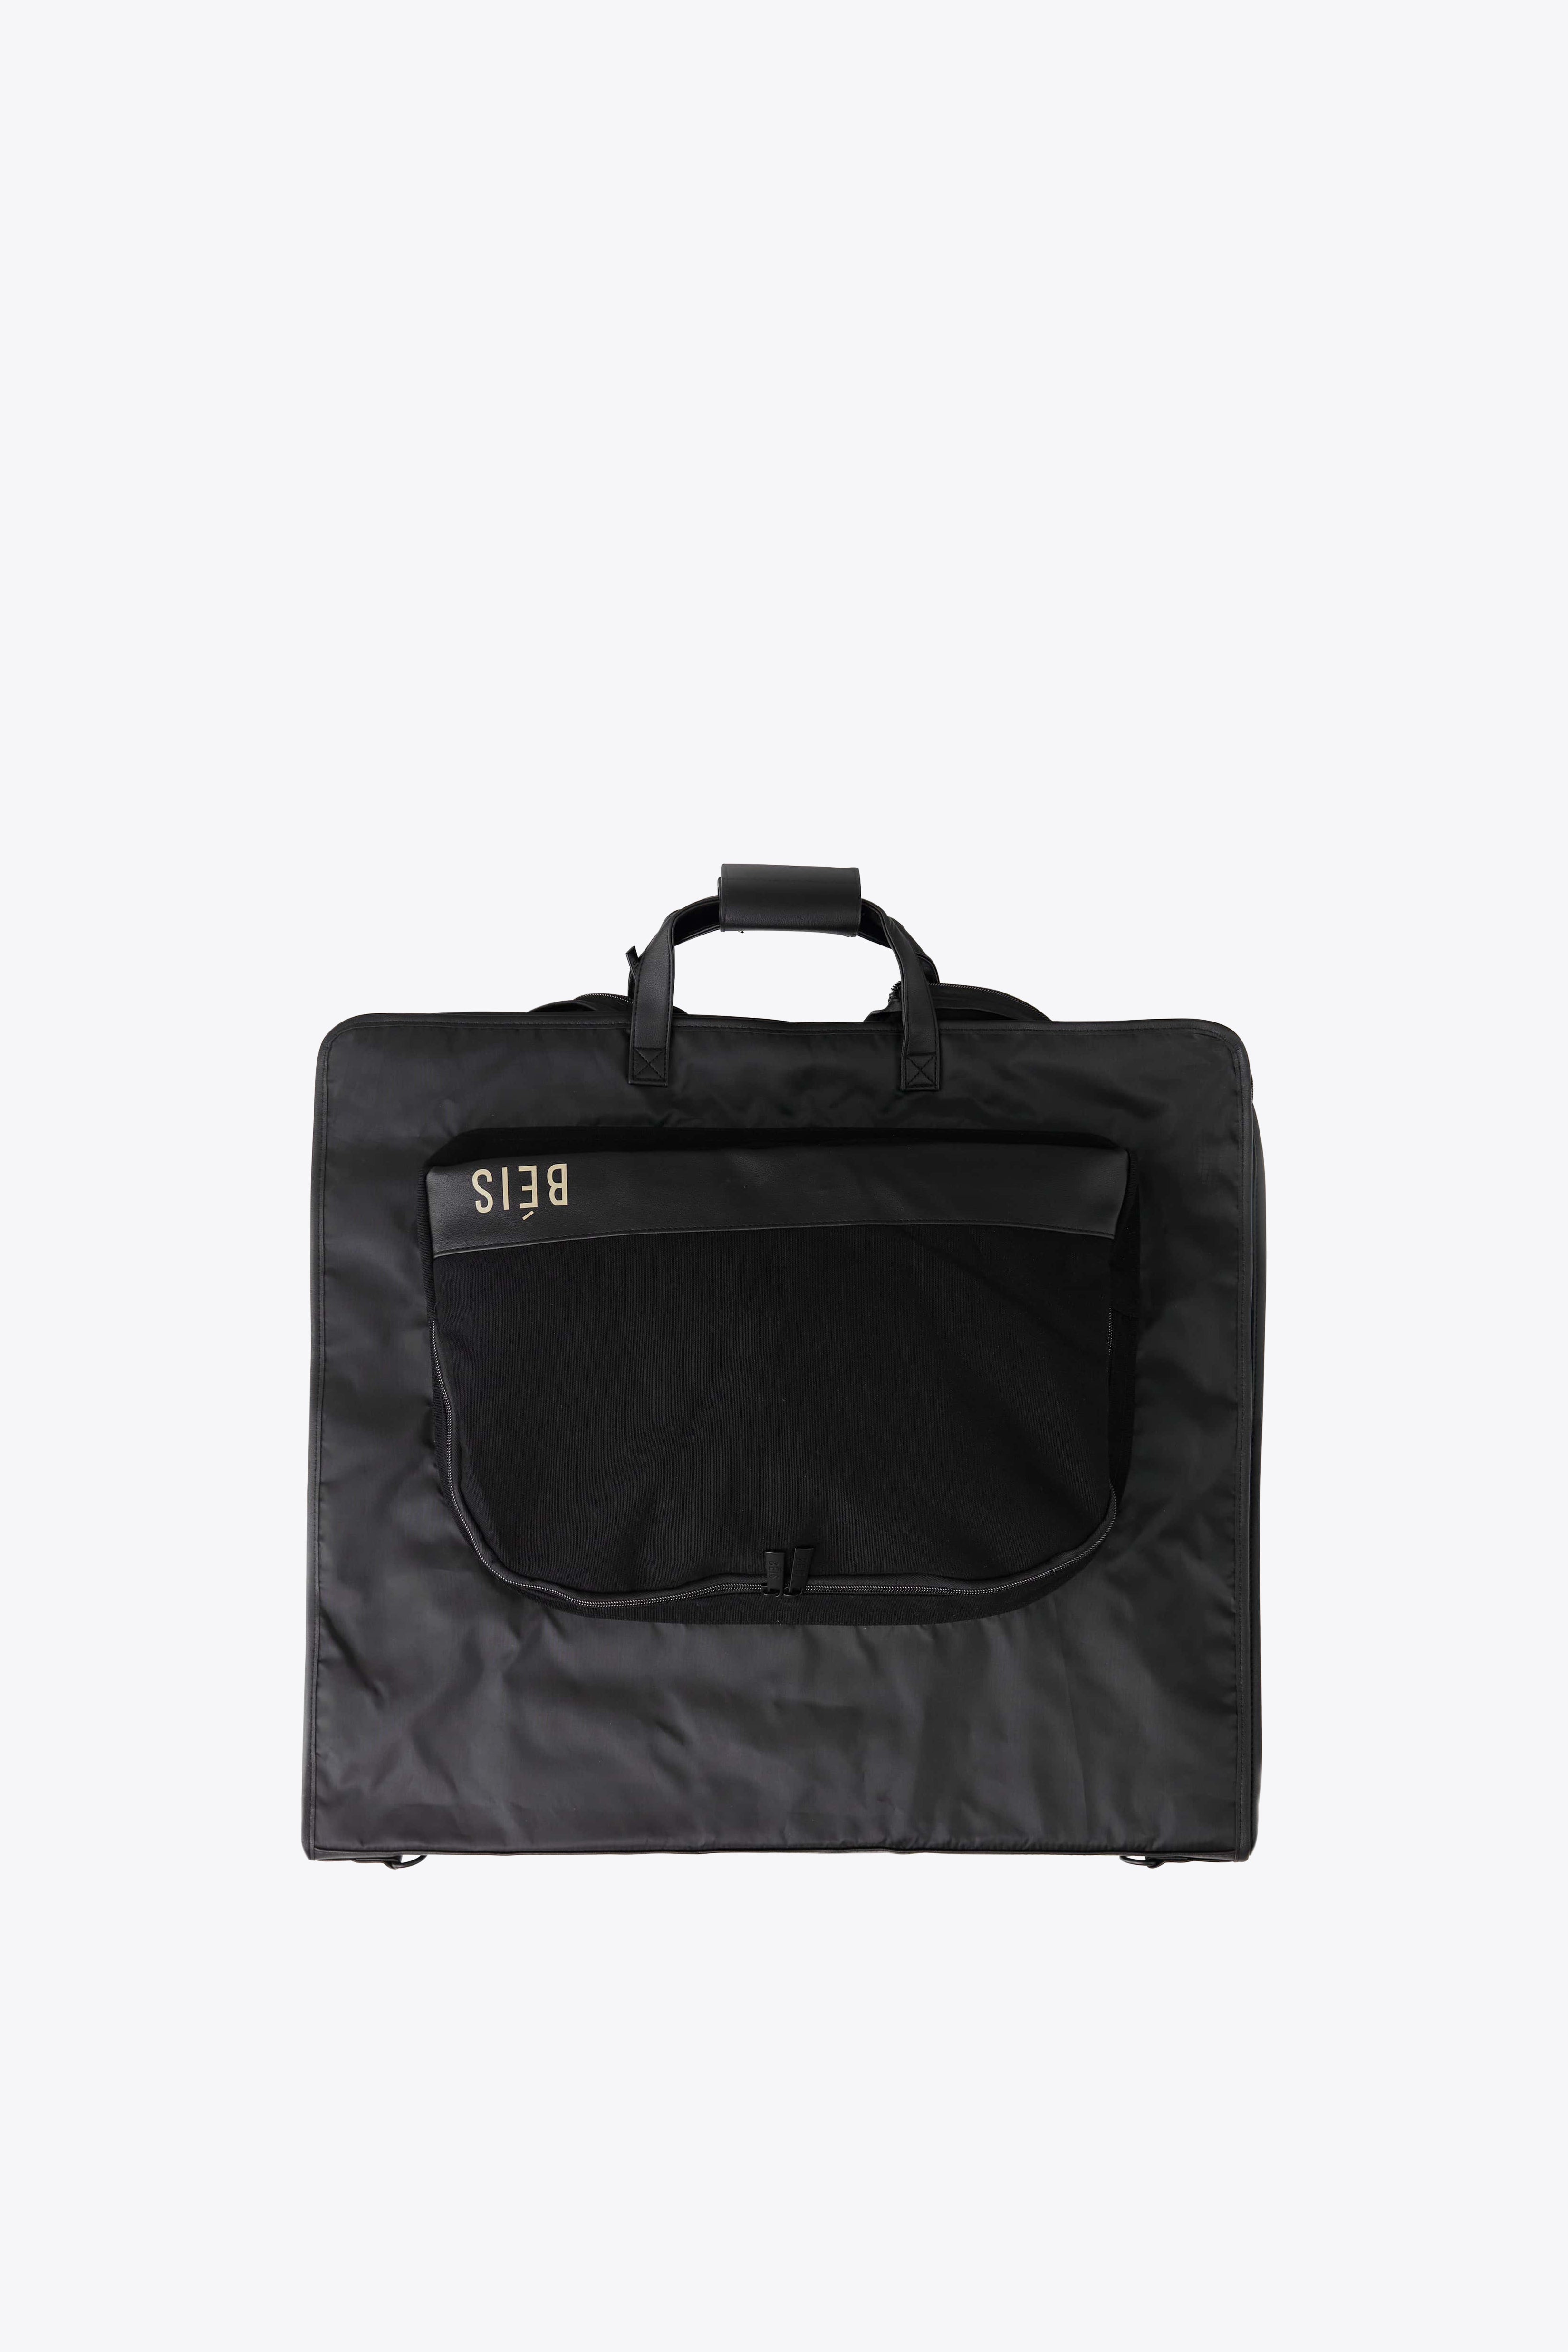 Premium Garment Duffle Bag - 2-in-1 Travel Suit Bag - Shoe Compartment